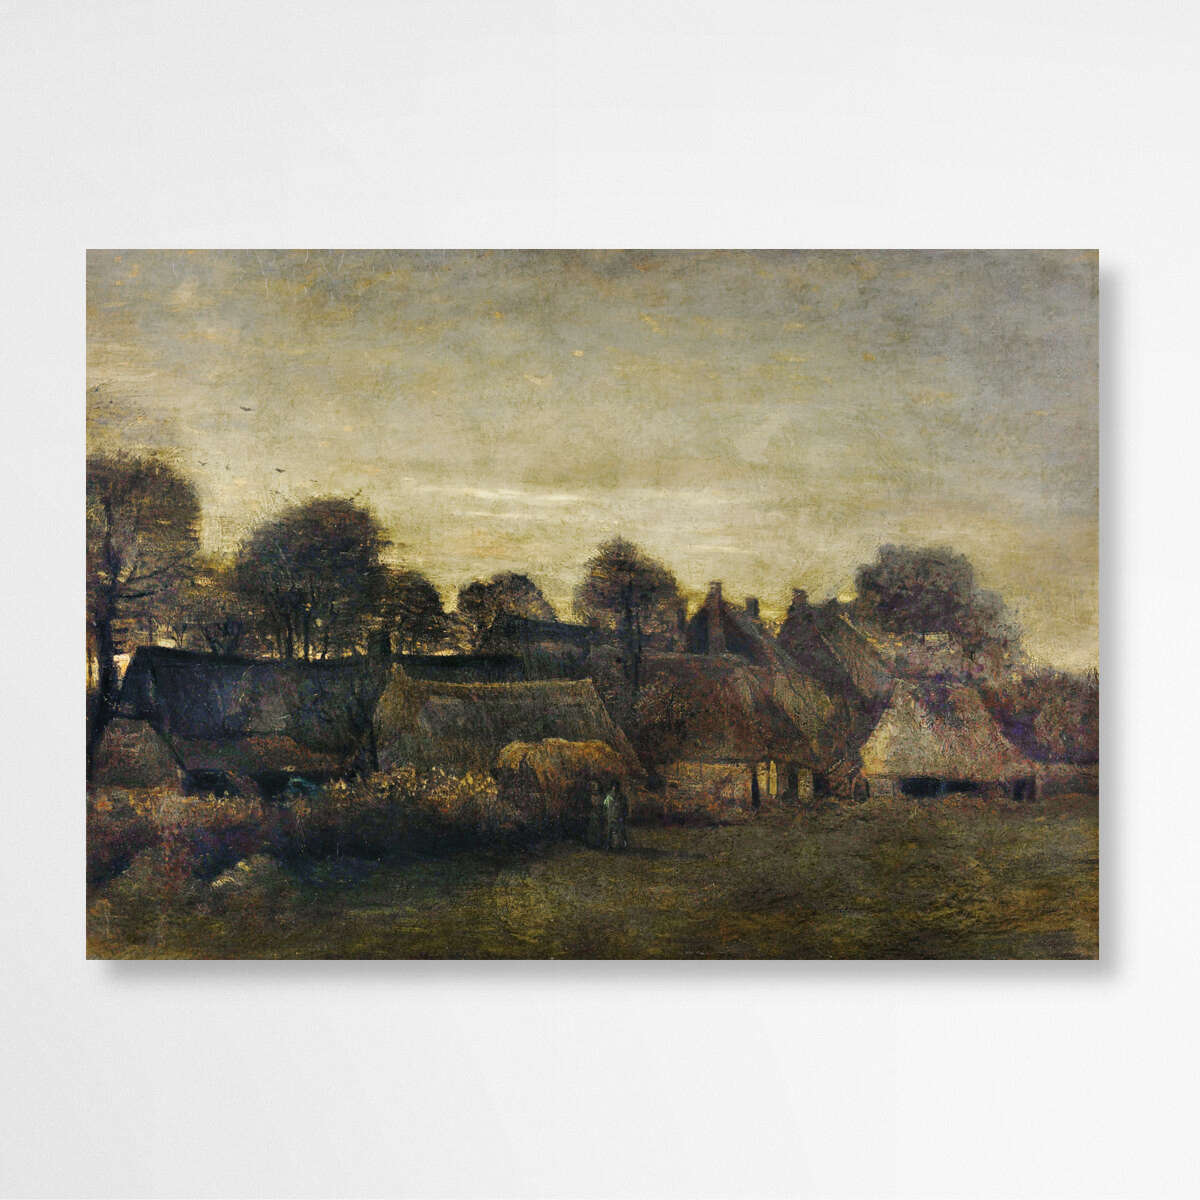 Farming Village at Twilight by Vincent Van Gogh | Vincent Van Gogh Wall Art Prints - The Canvas Hive